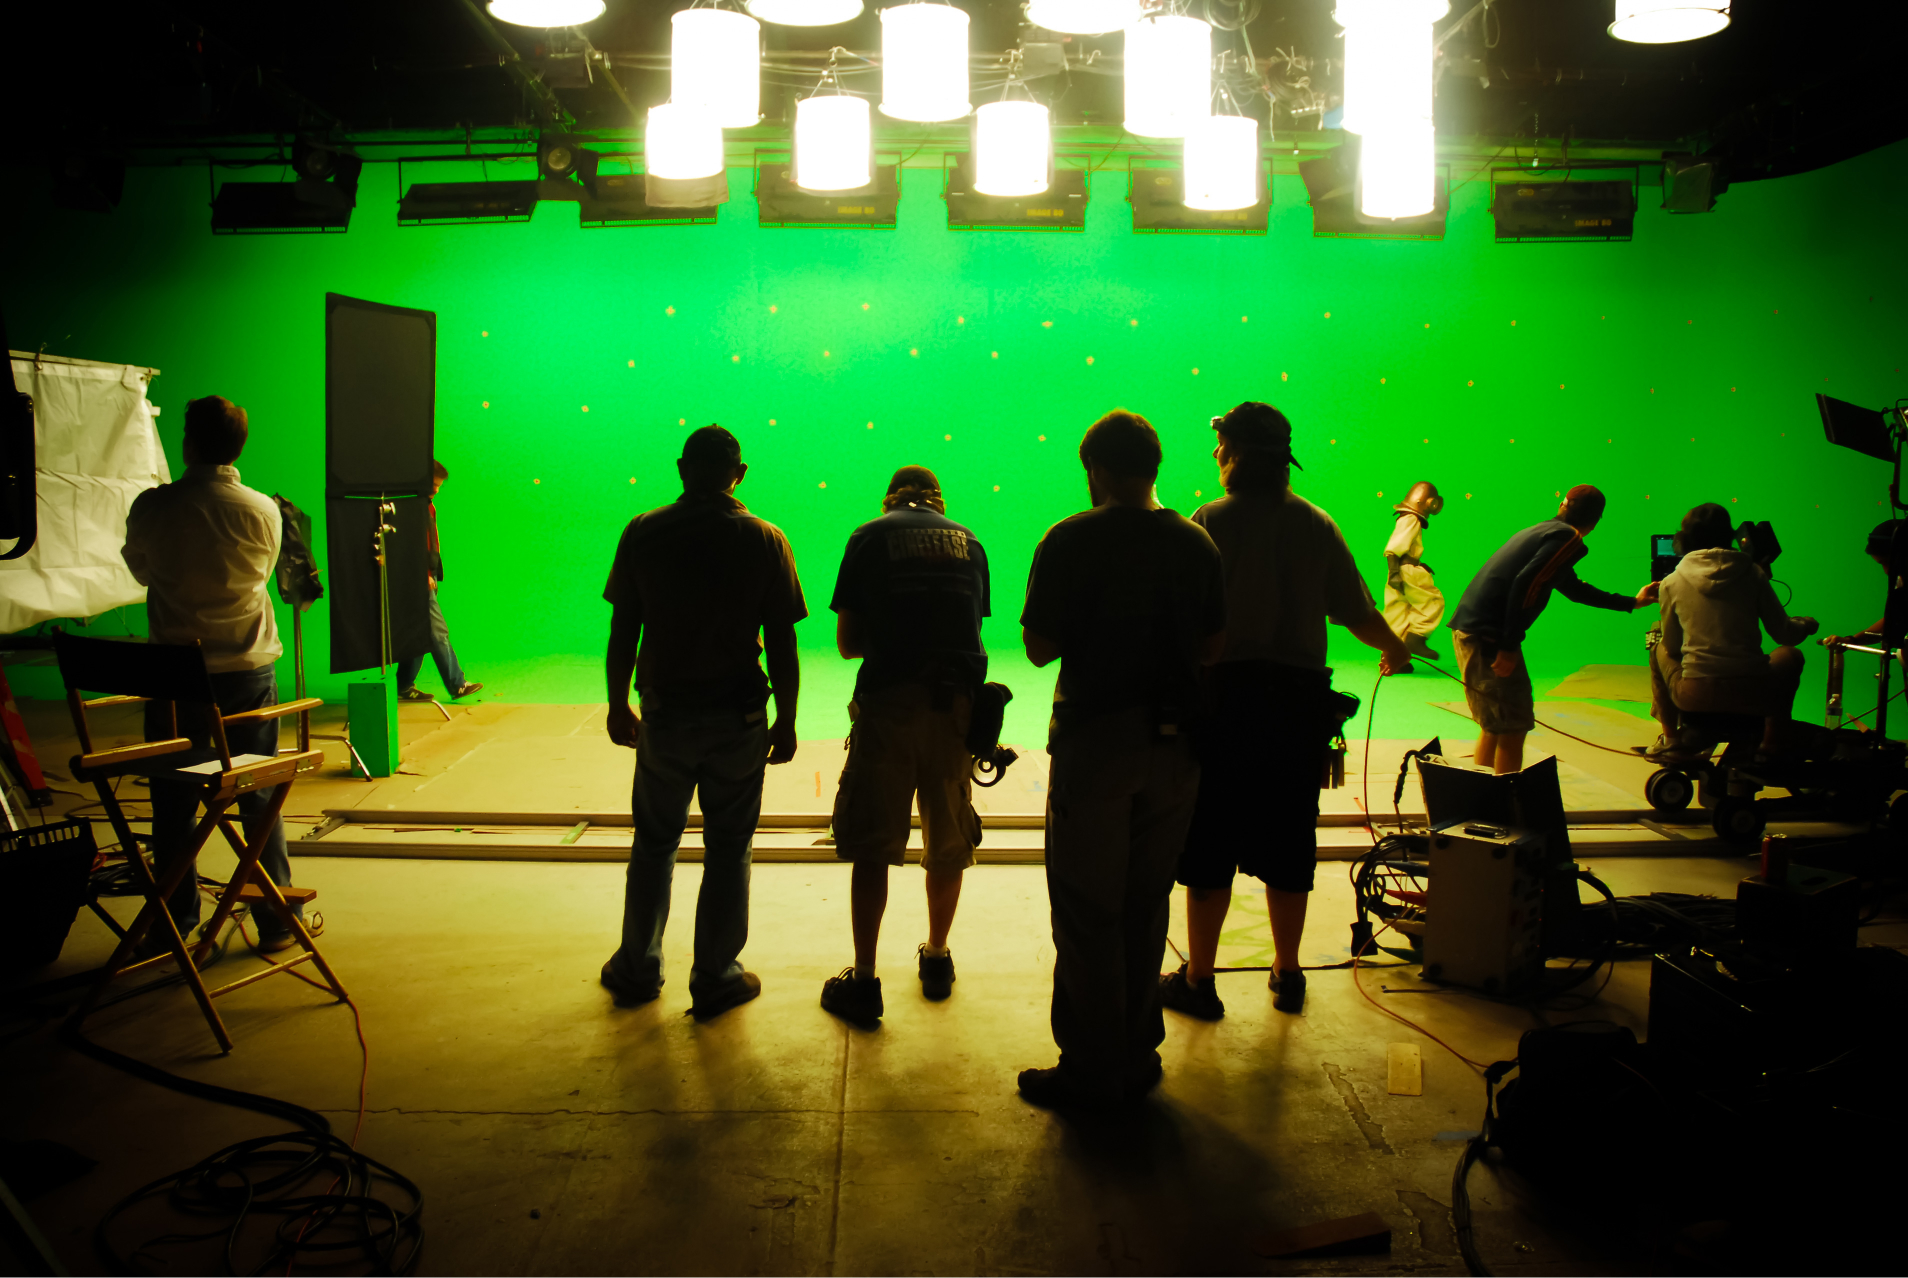 movie-production-visual-effects-green-screen-2022-10-31-21-55-27-utc 1